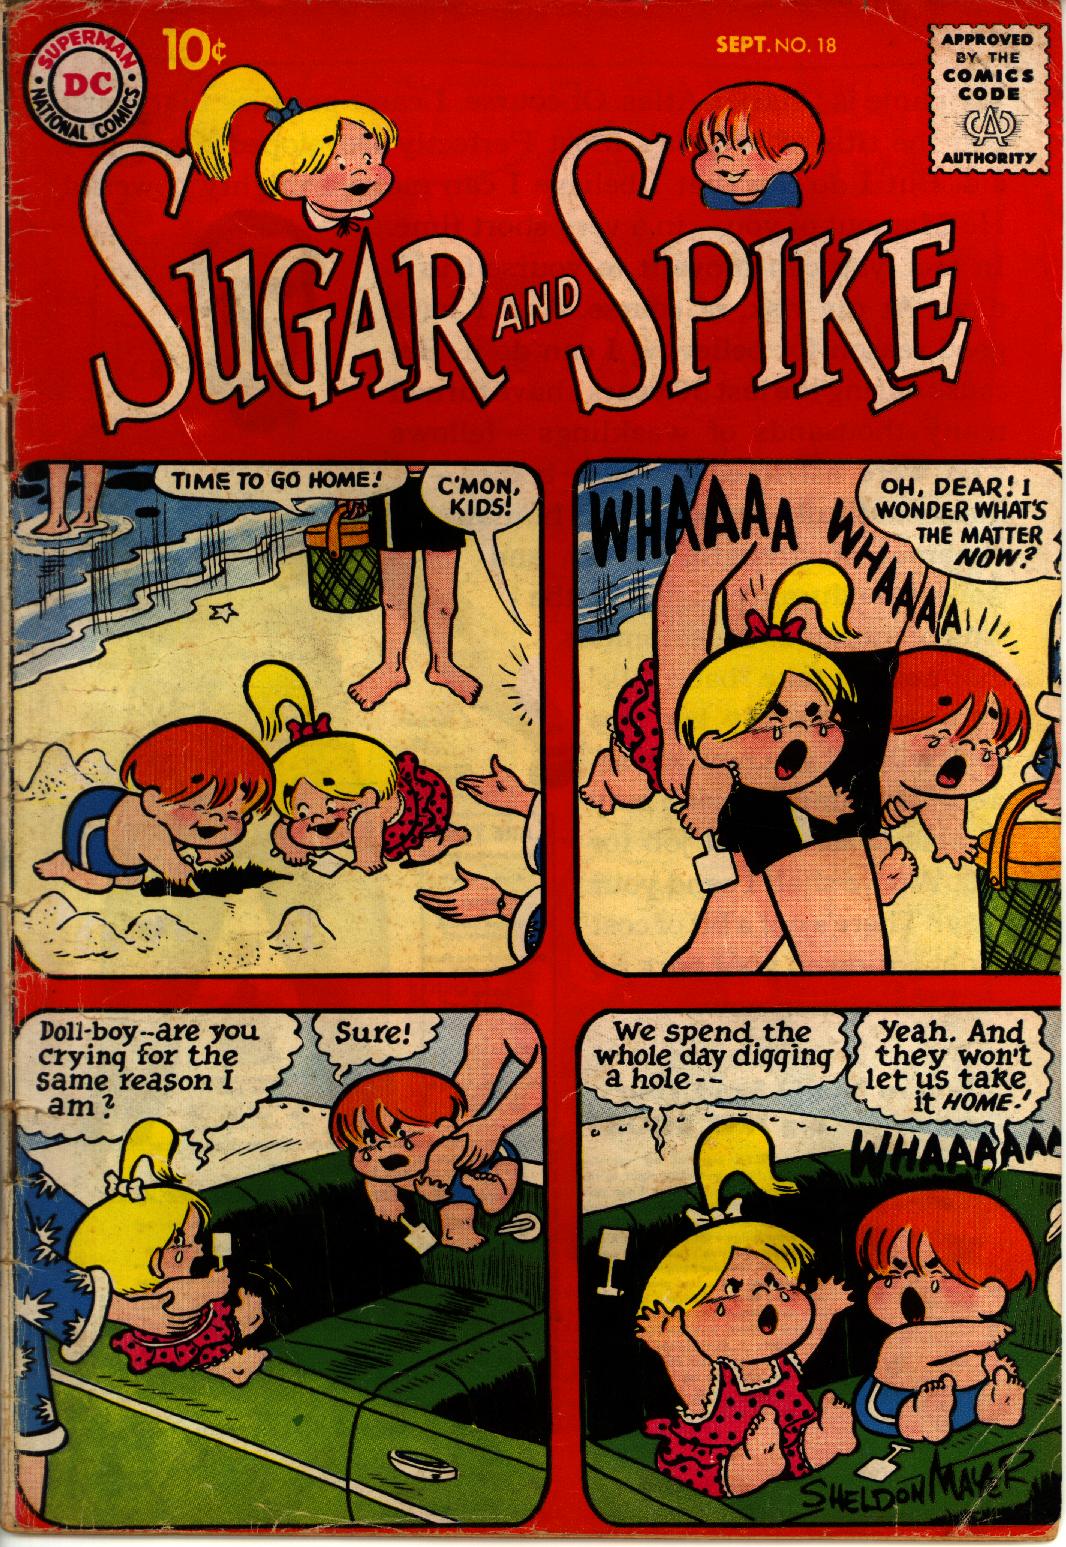 Sugar code. Популярные шипы комикс. Шугар том.